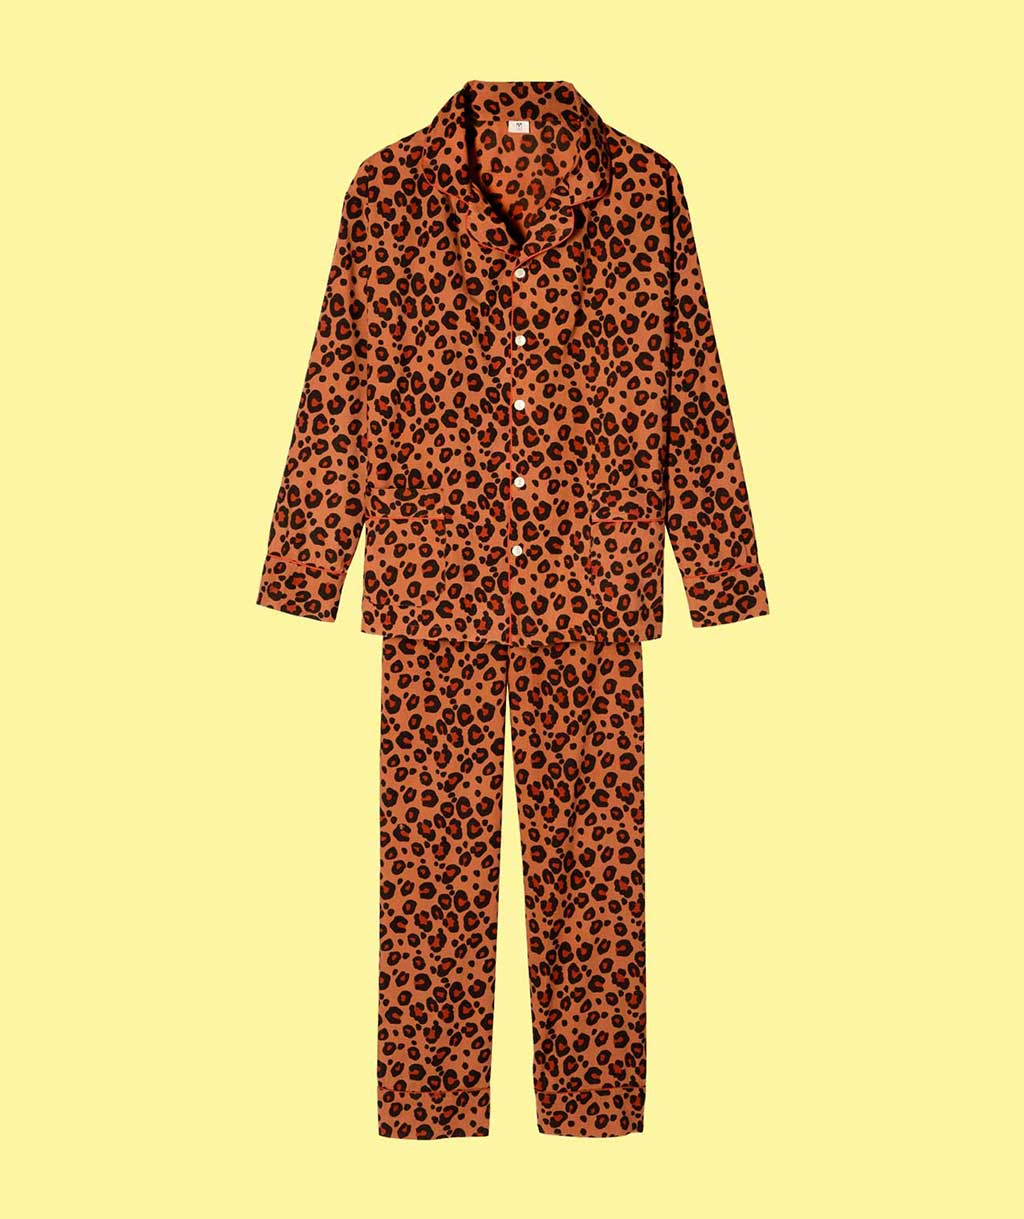 Leopard Men's Pajamas